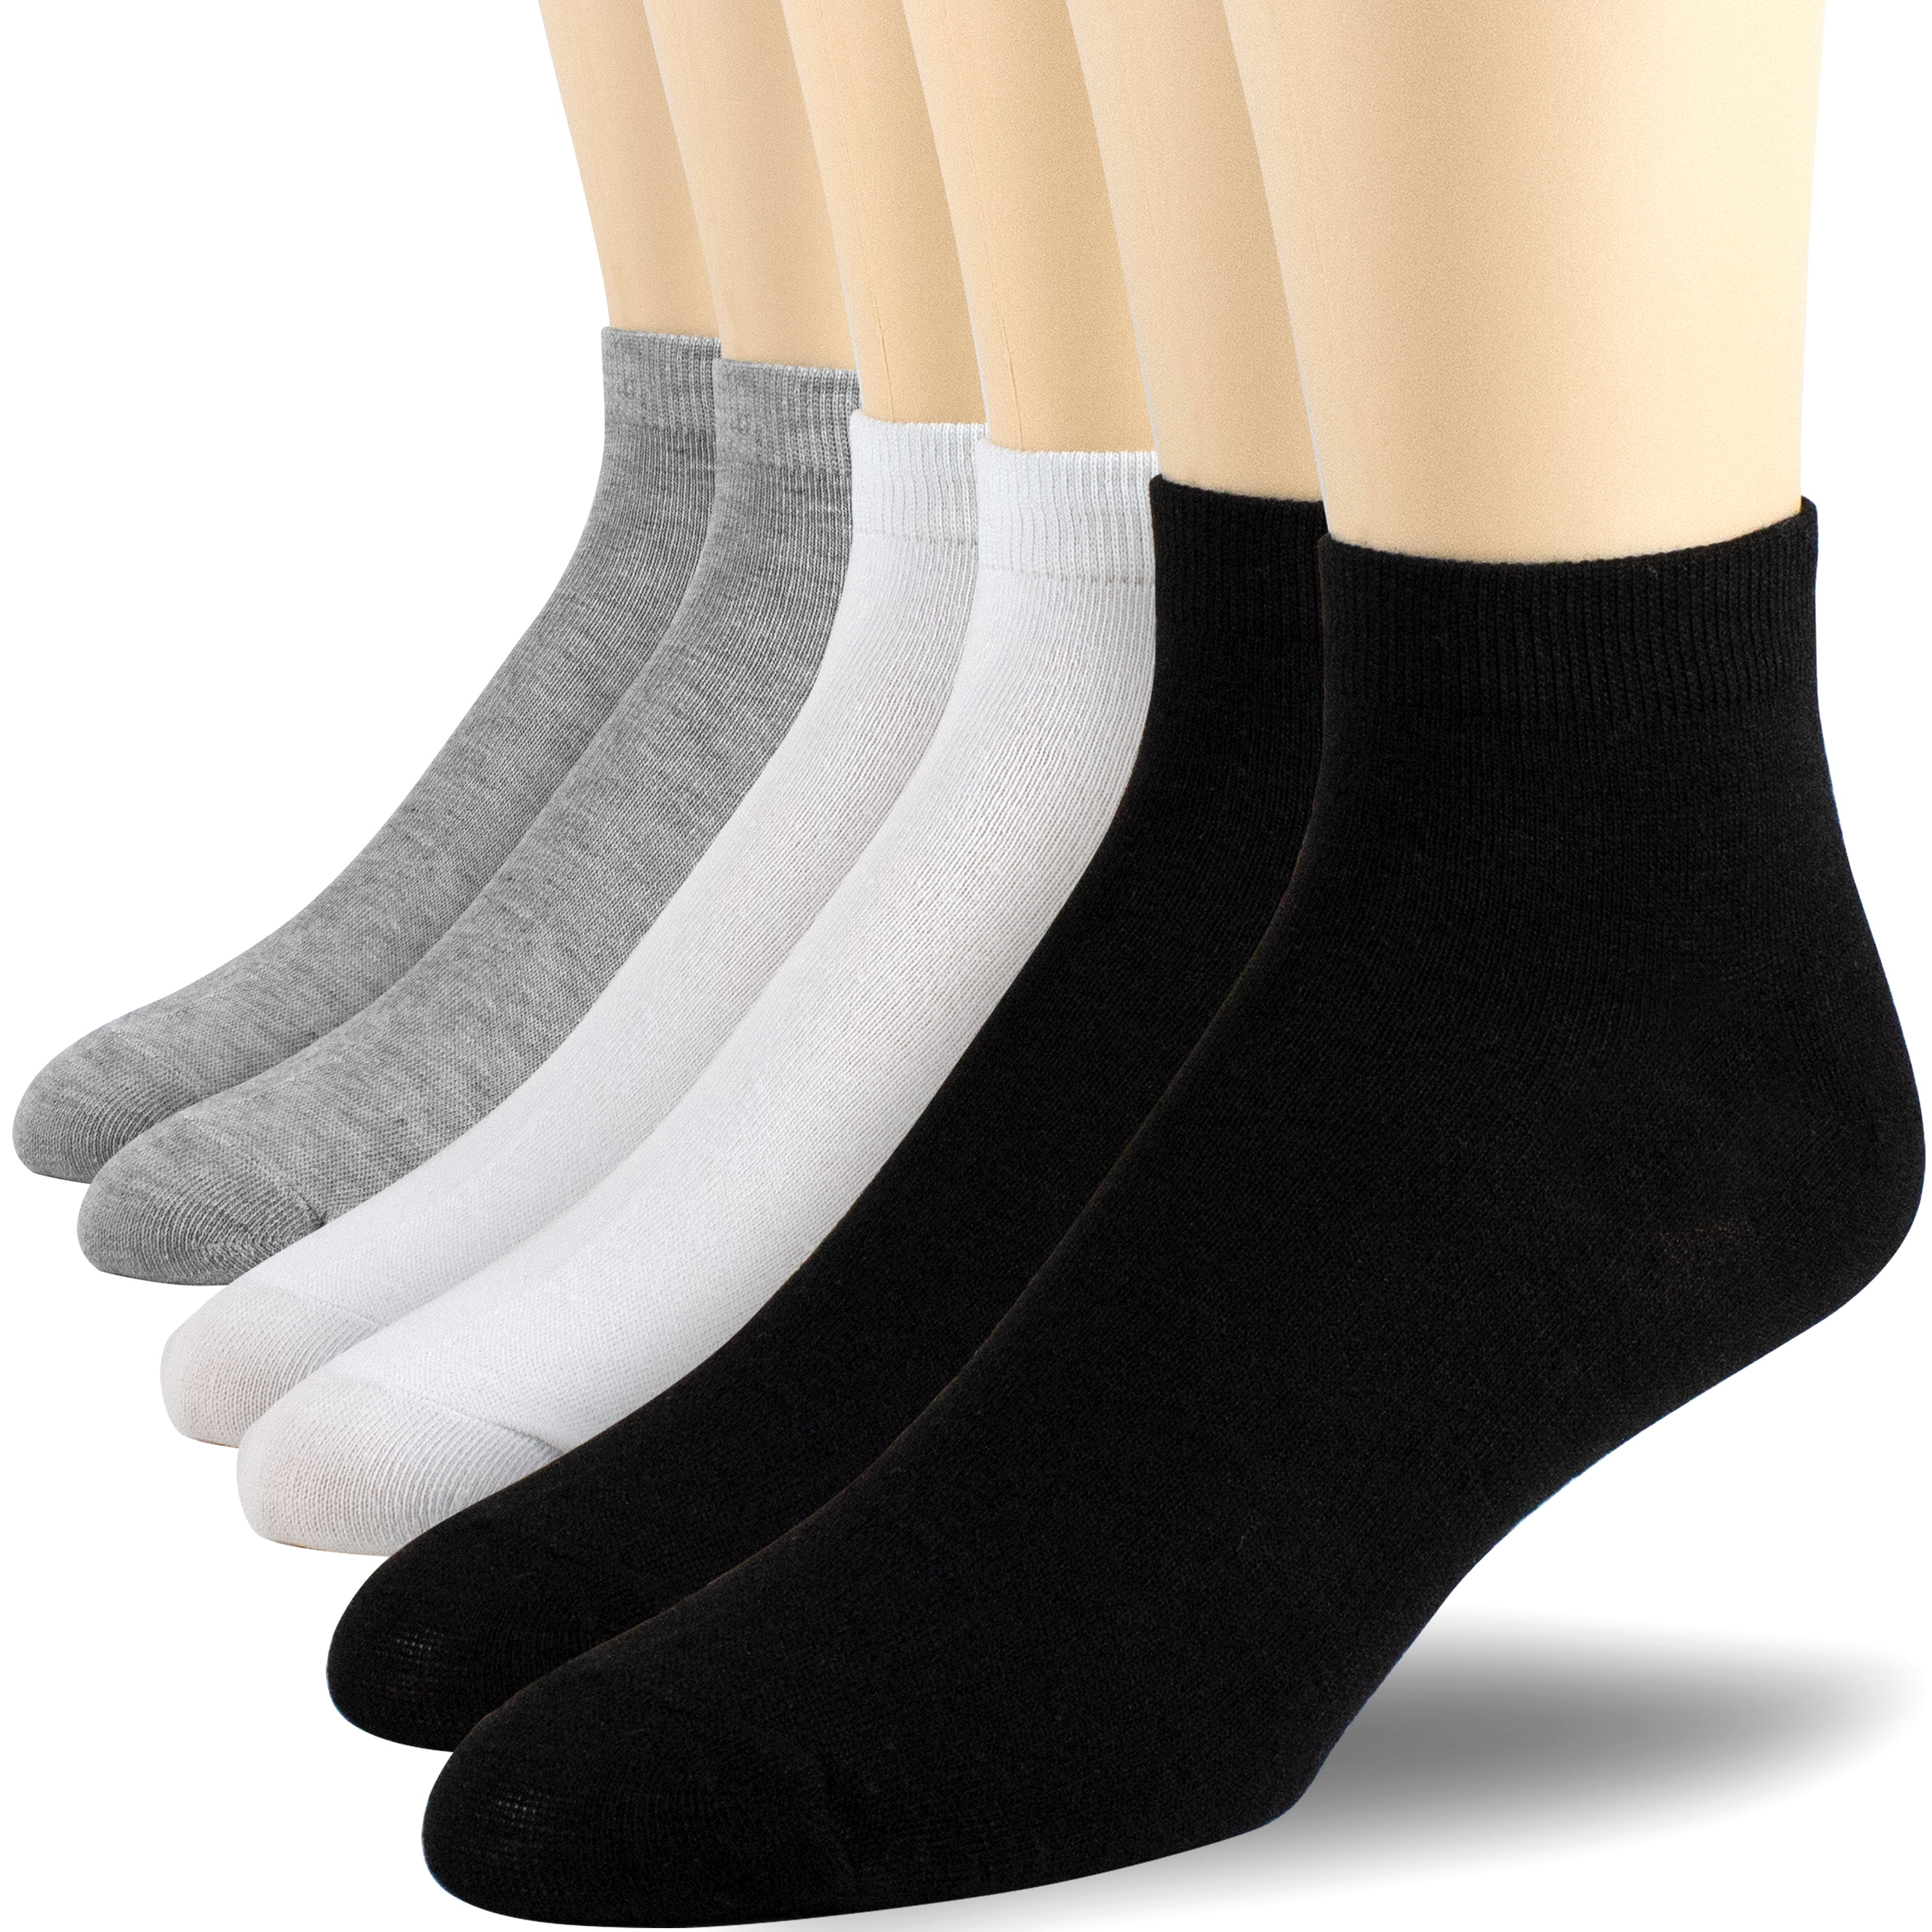 Mens & Womens Large Solid Color Basketball Socks Sock Size 10-13 